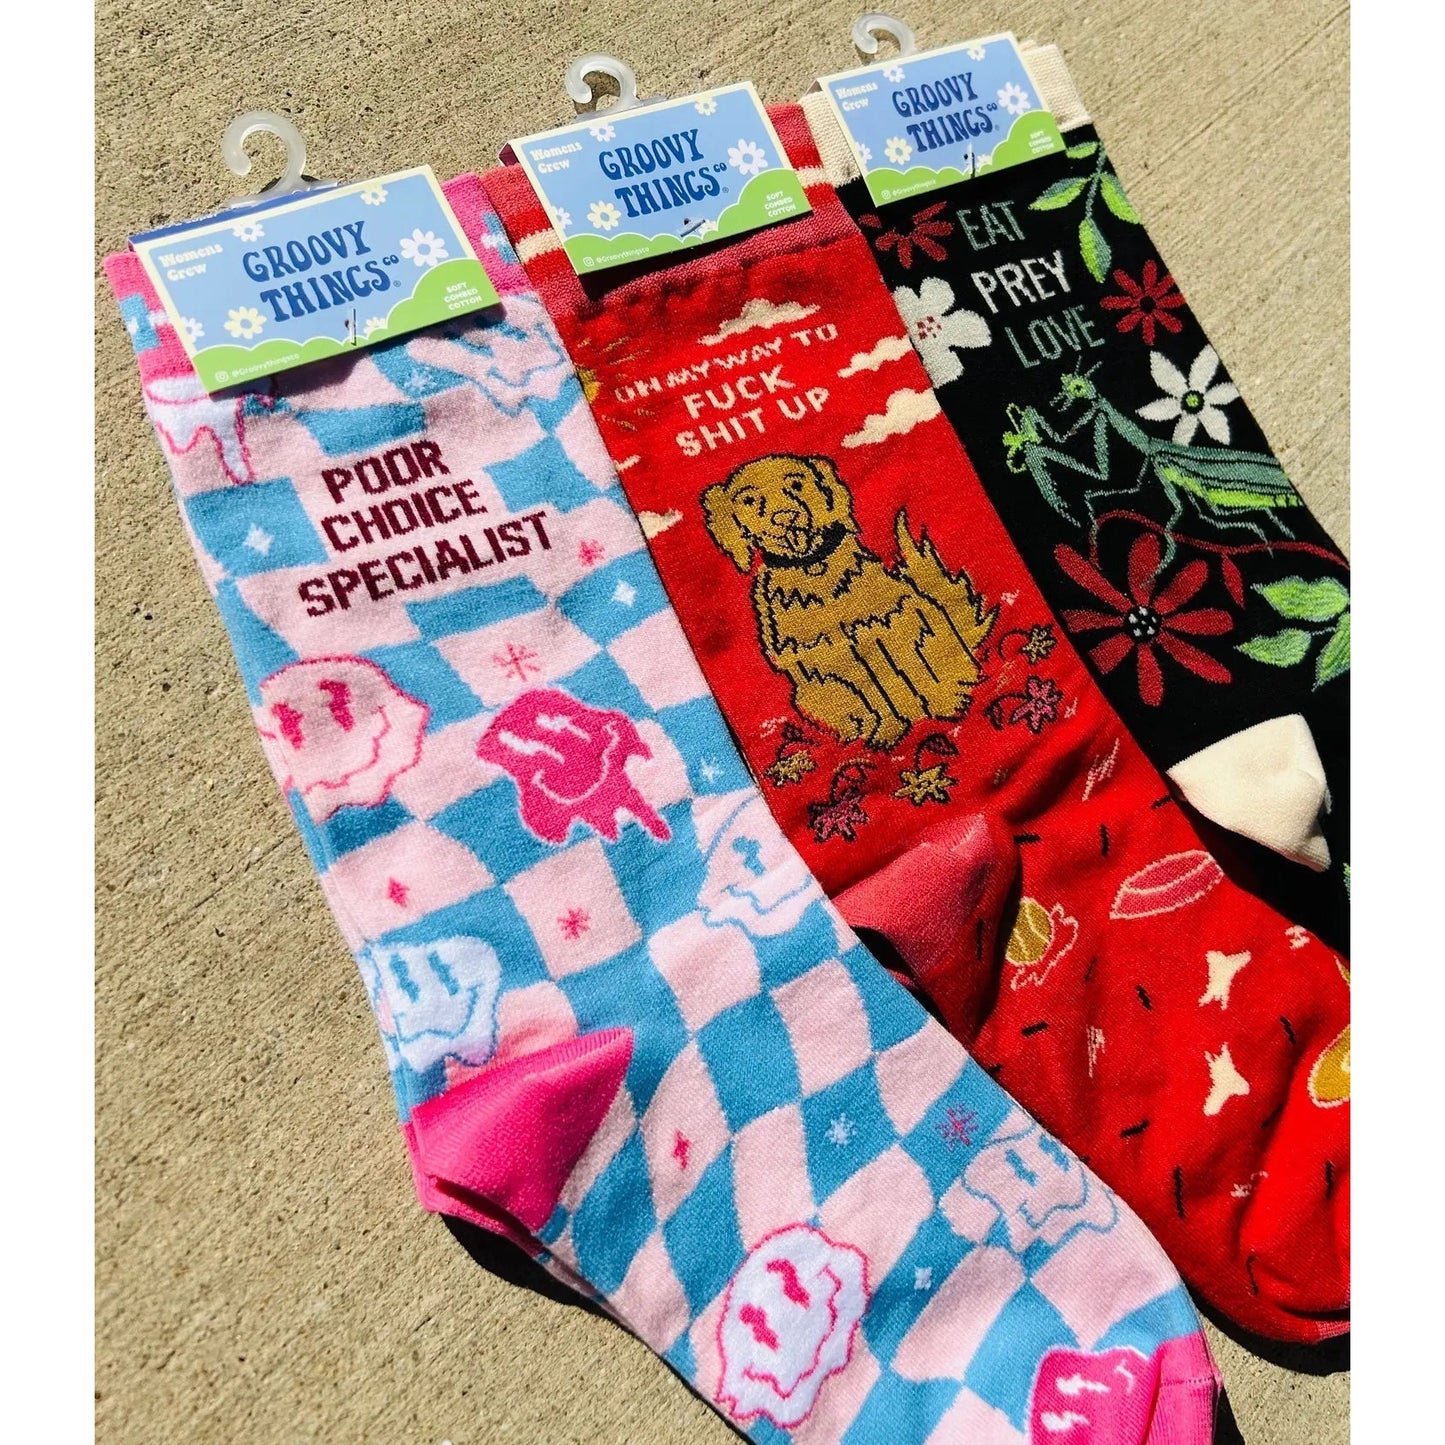 Eat Prey Love Women's Socks Featuring Mantis Motif